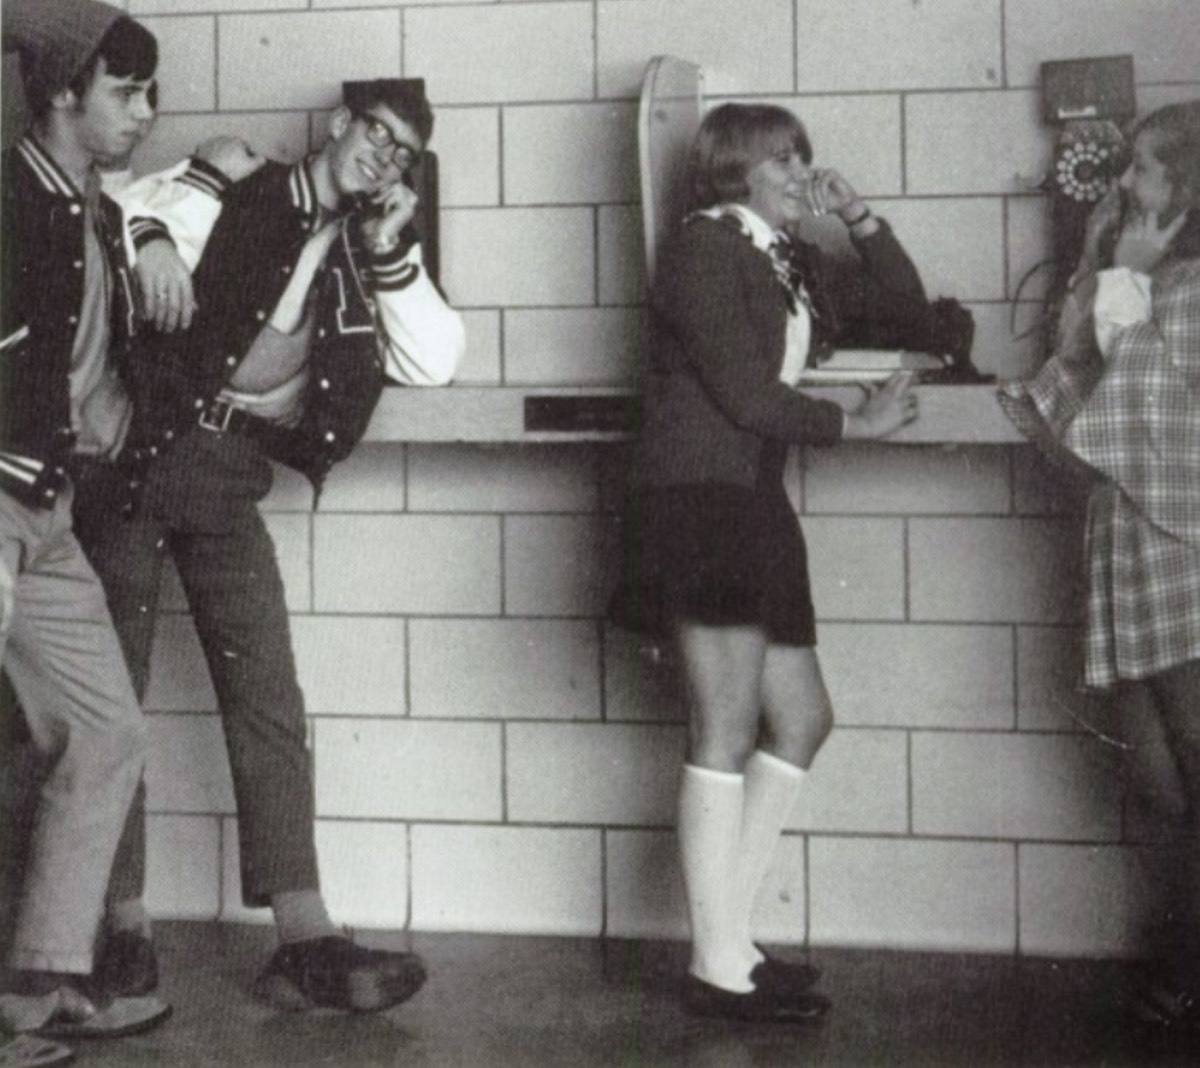 Ramsey students on phones in hallway